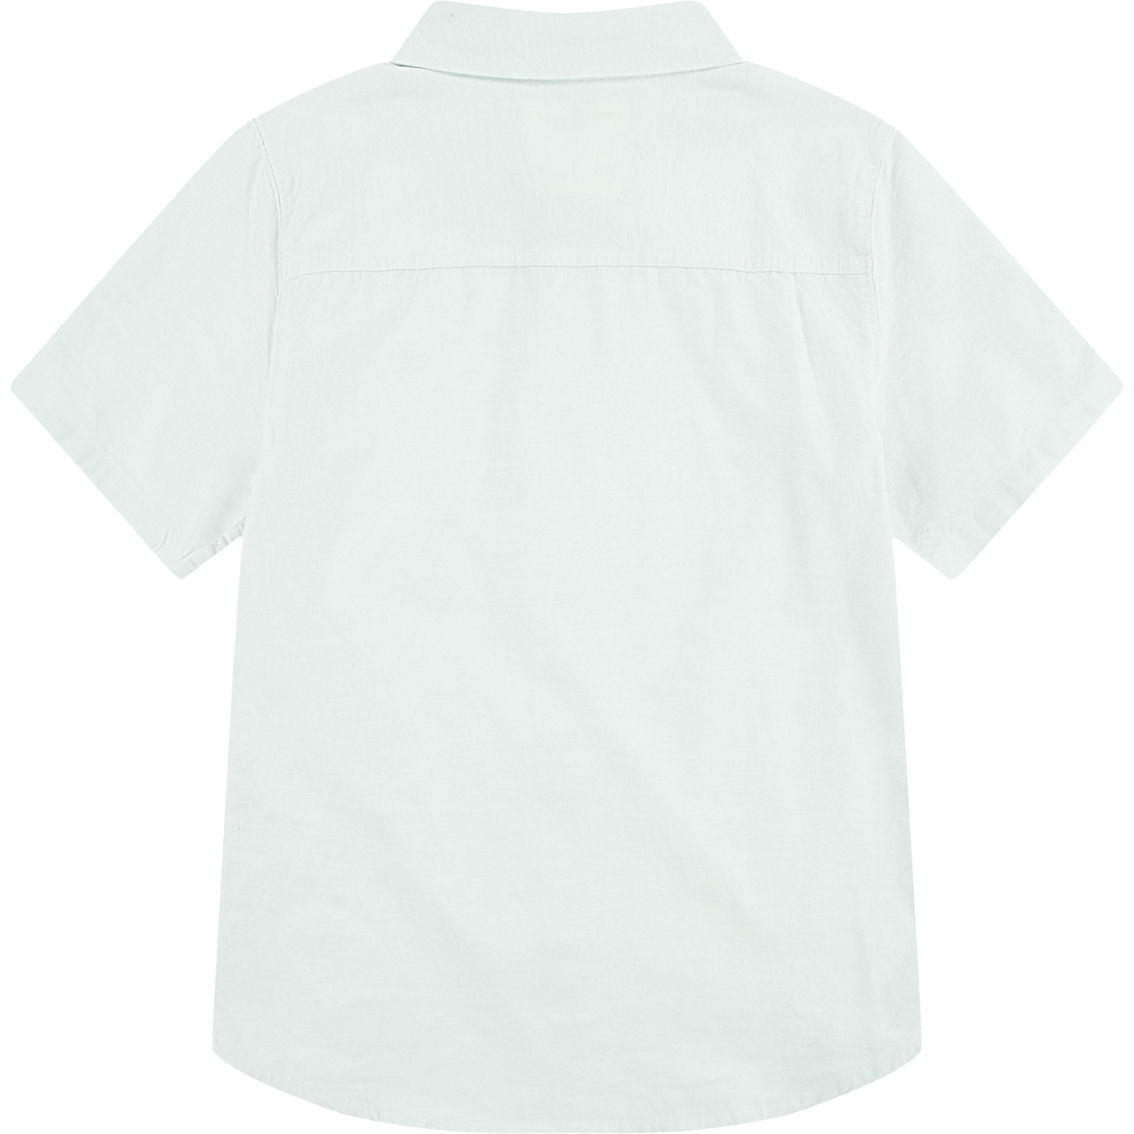 Levi's Boys Woven Shirt - Image 2 of 3